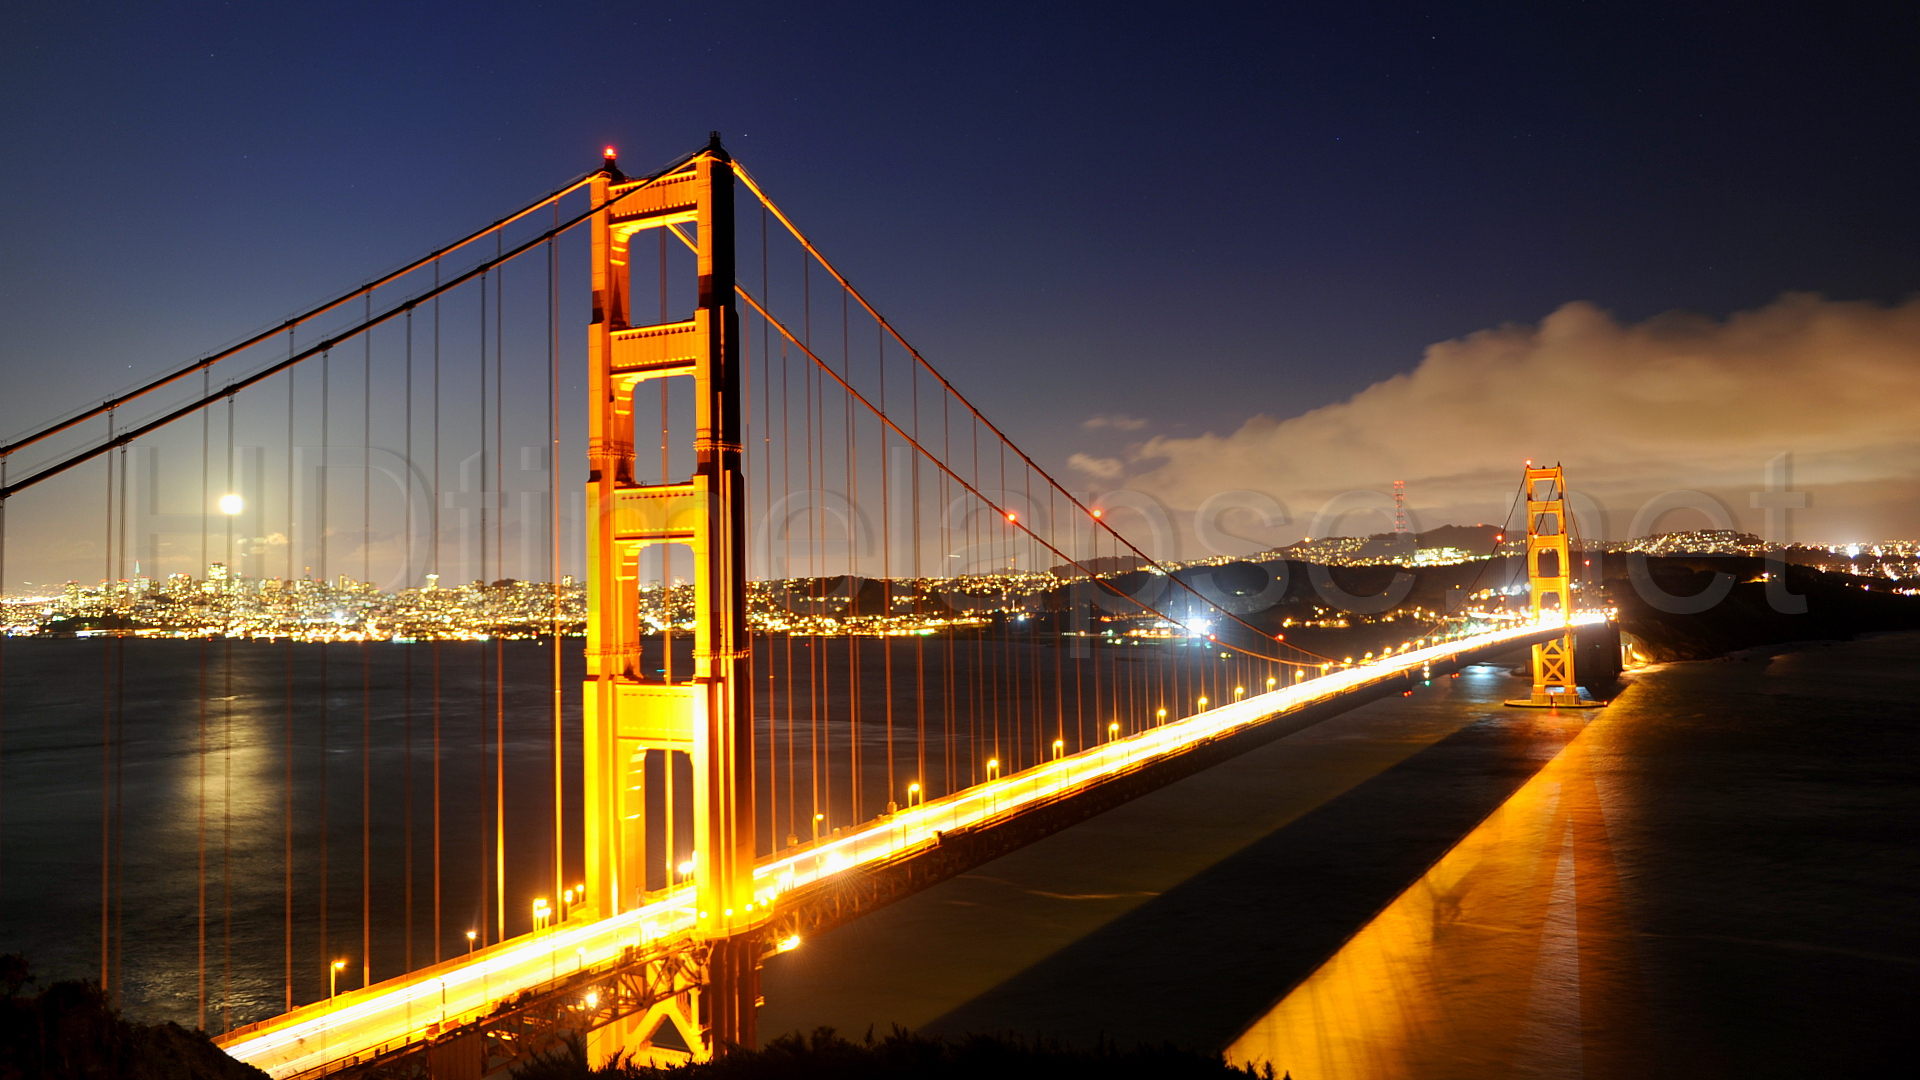 The Golden Gate Bridge Night View